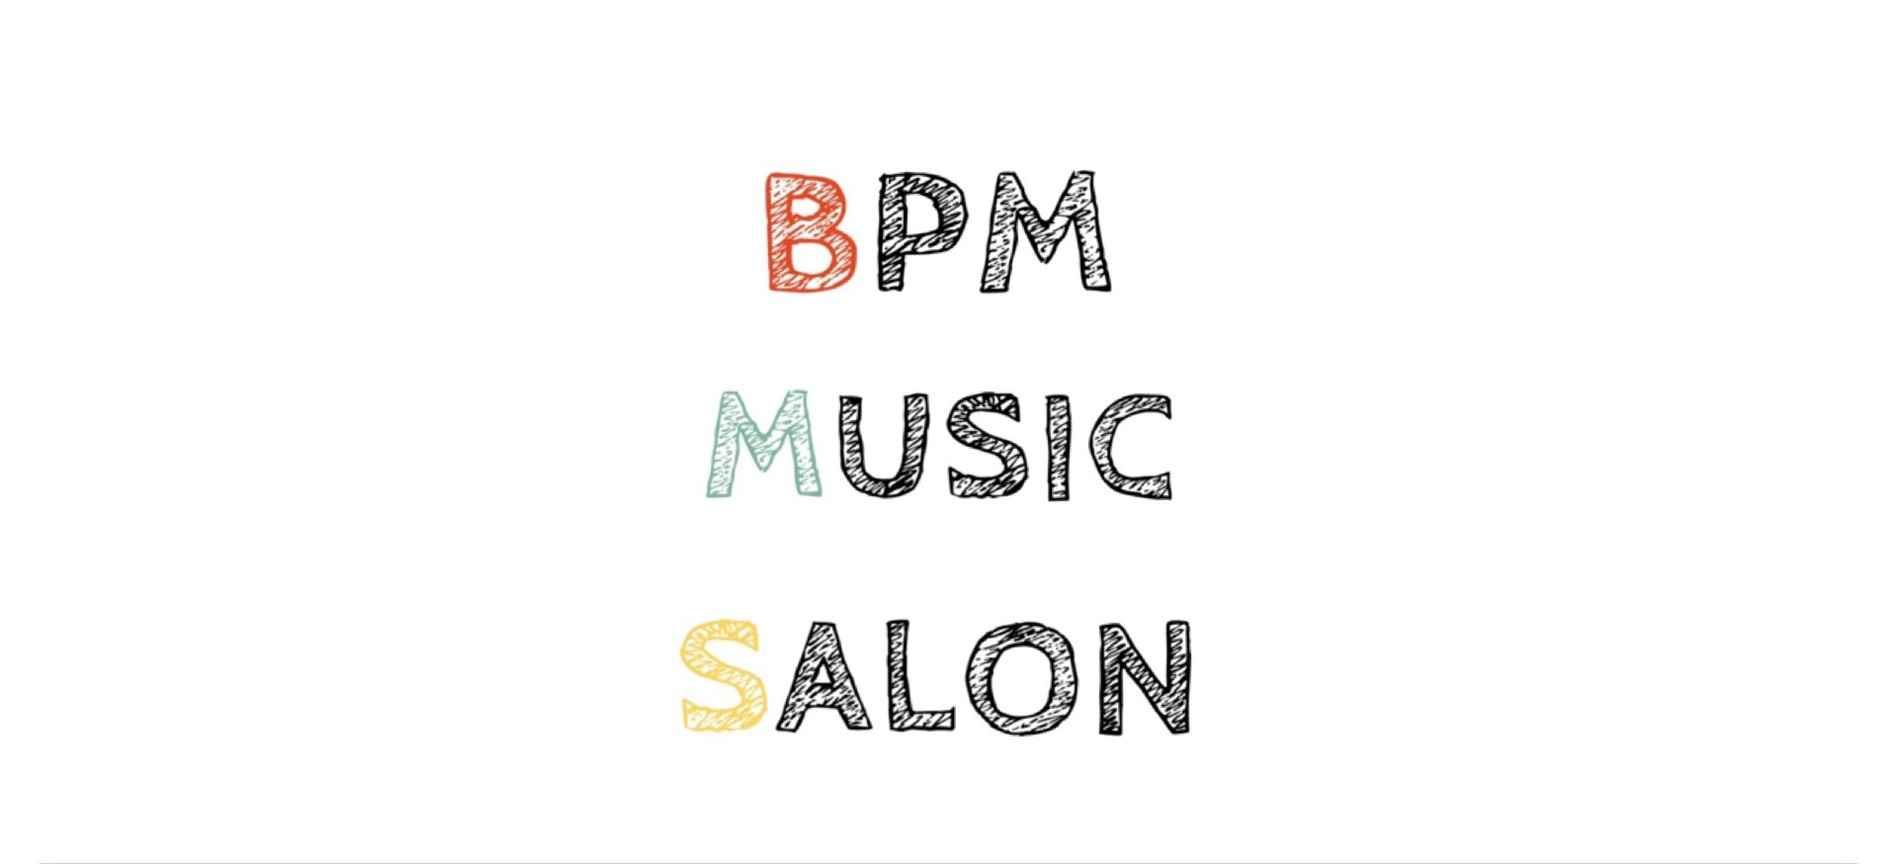 BPM MUSIC SALON